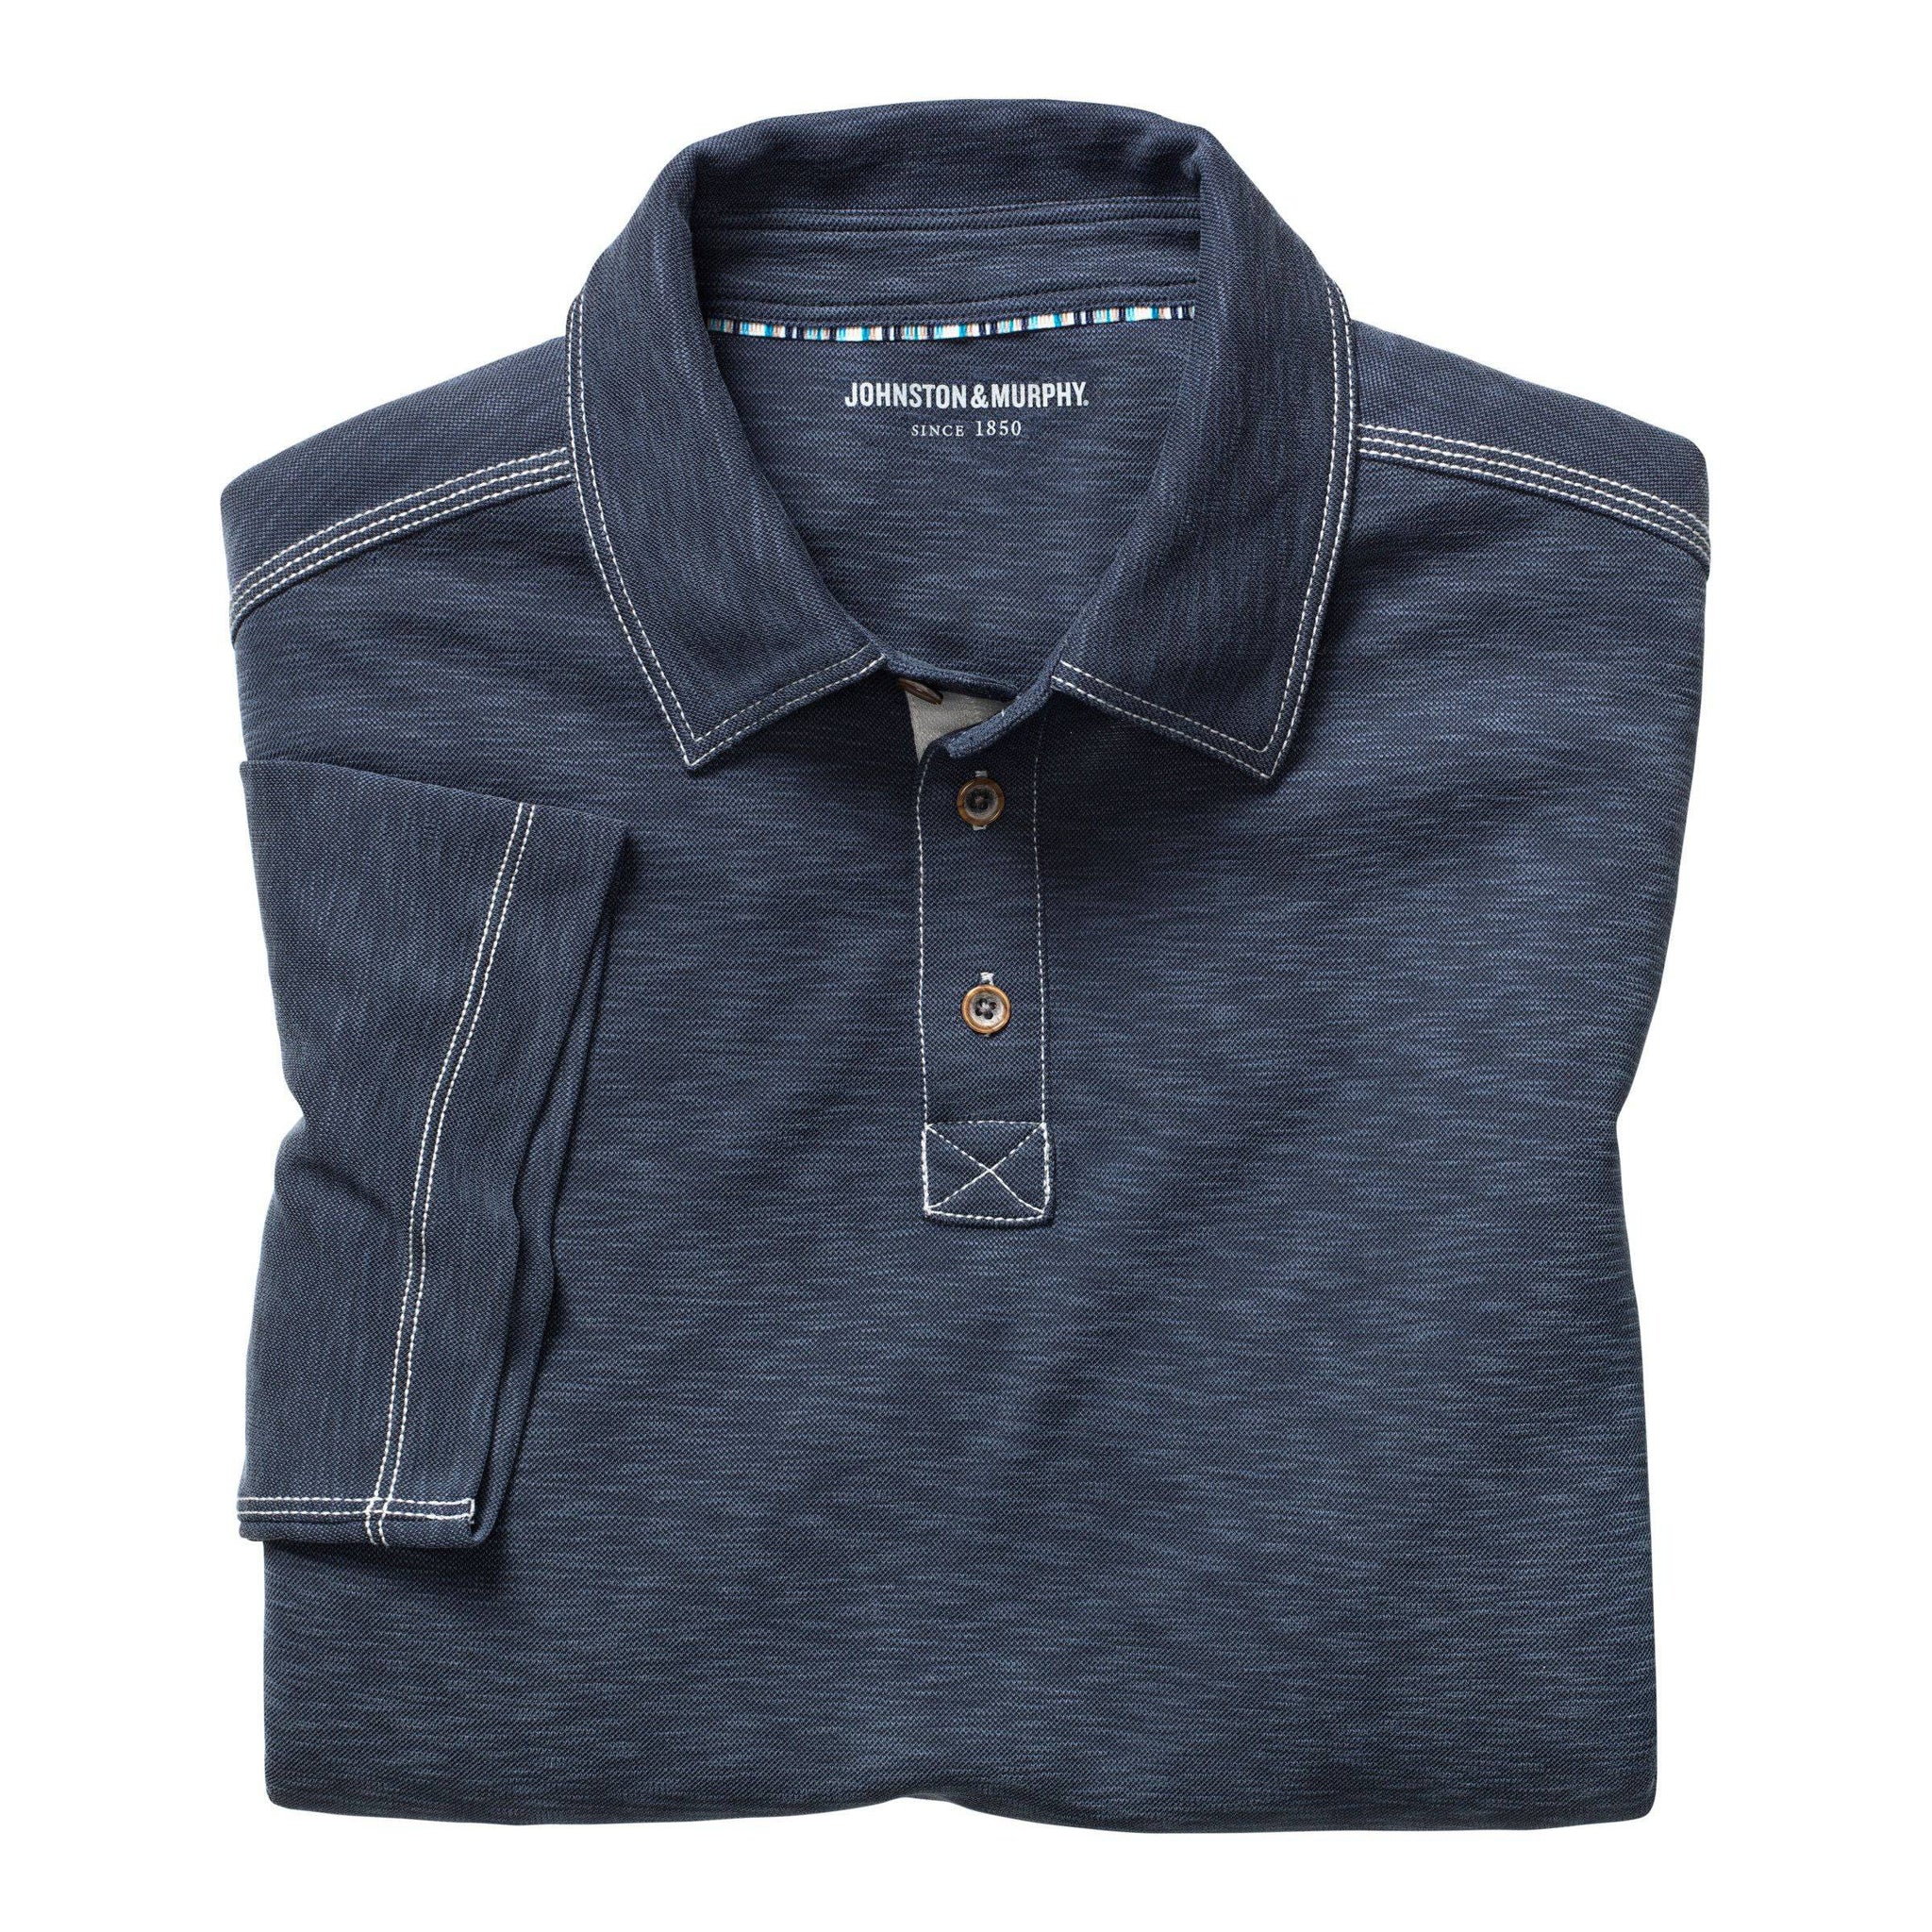 Johnston & Murphy Vintage Slub Polo Shirt in Navy - Rainwater's Men's Clothing and Tuxedo Rental